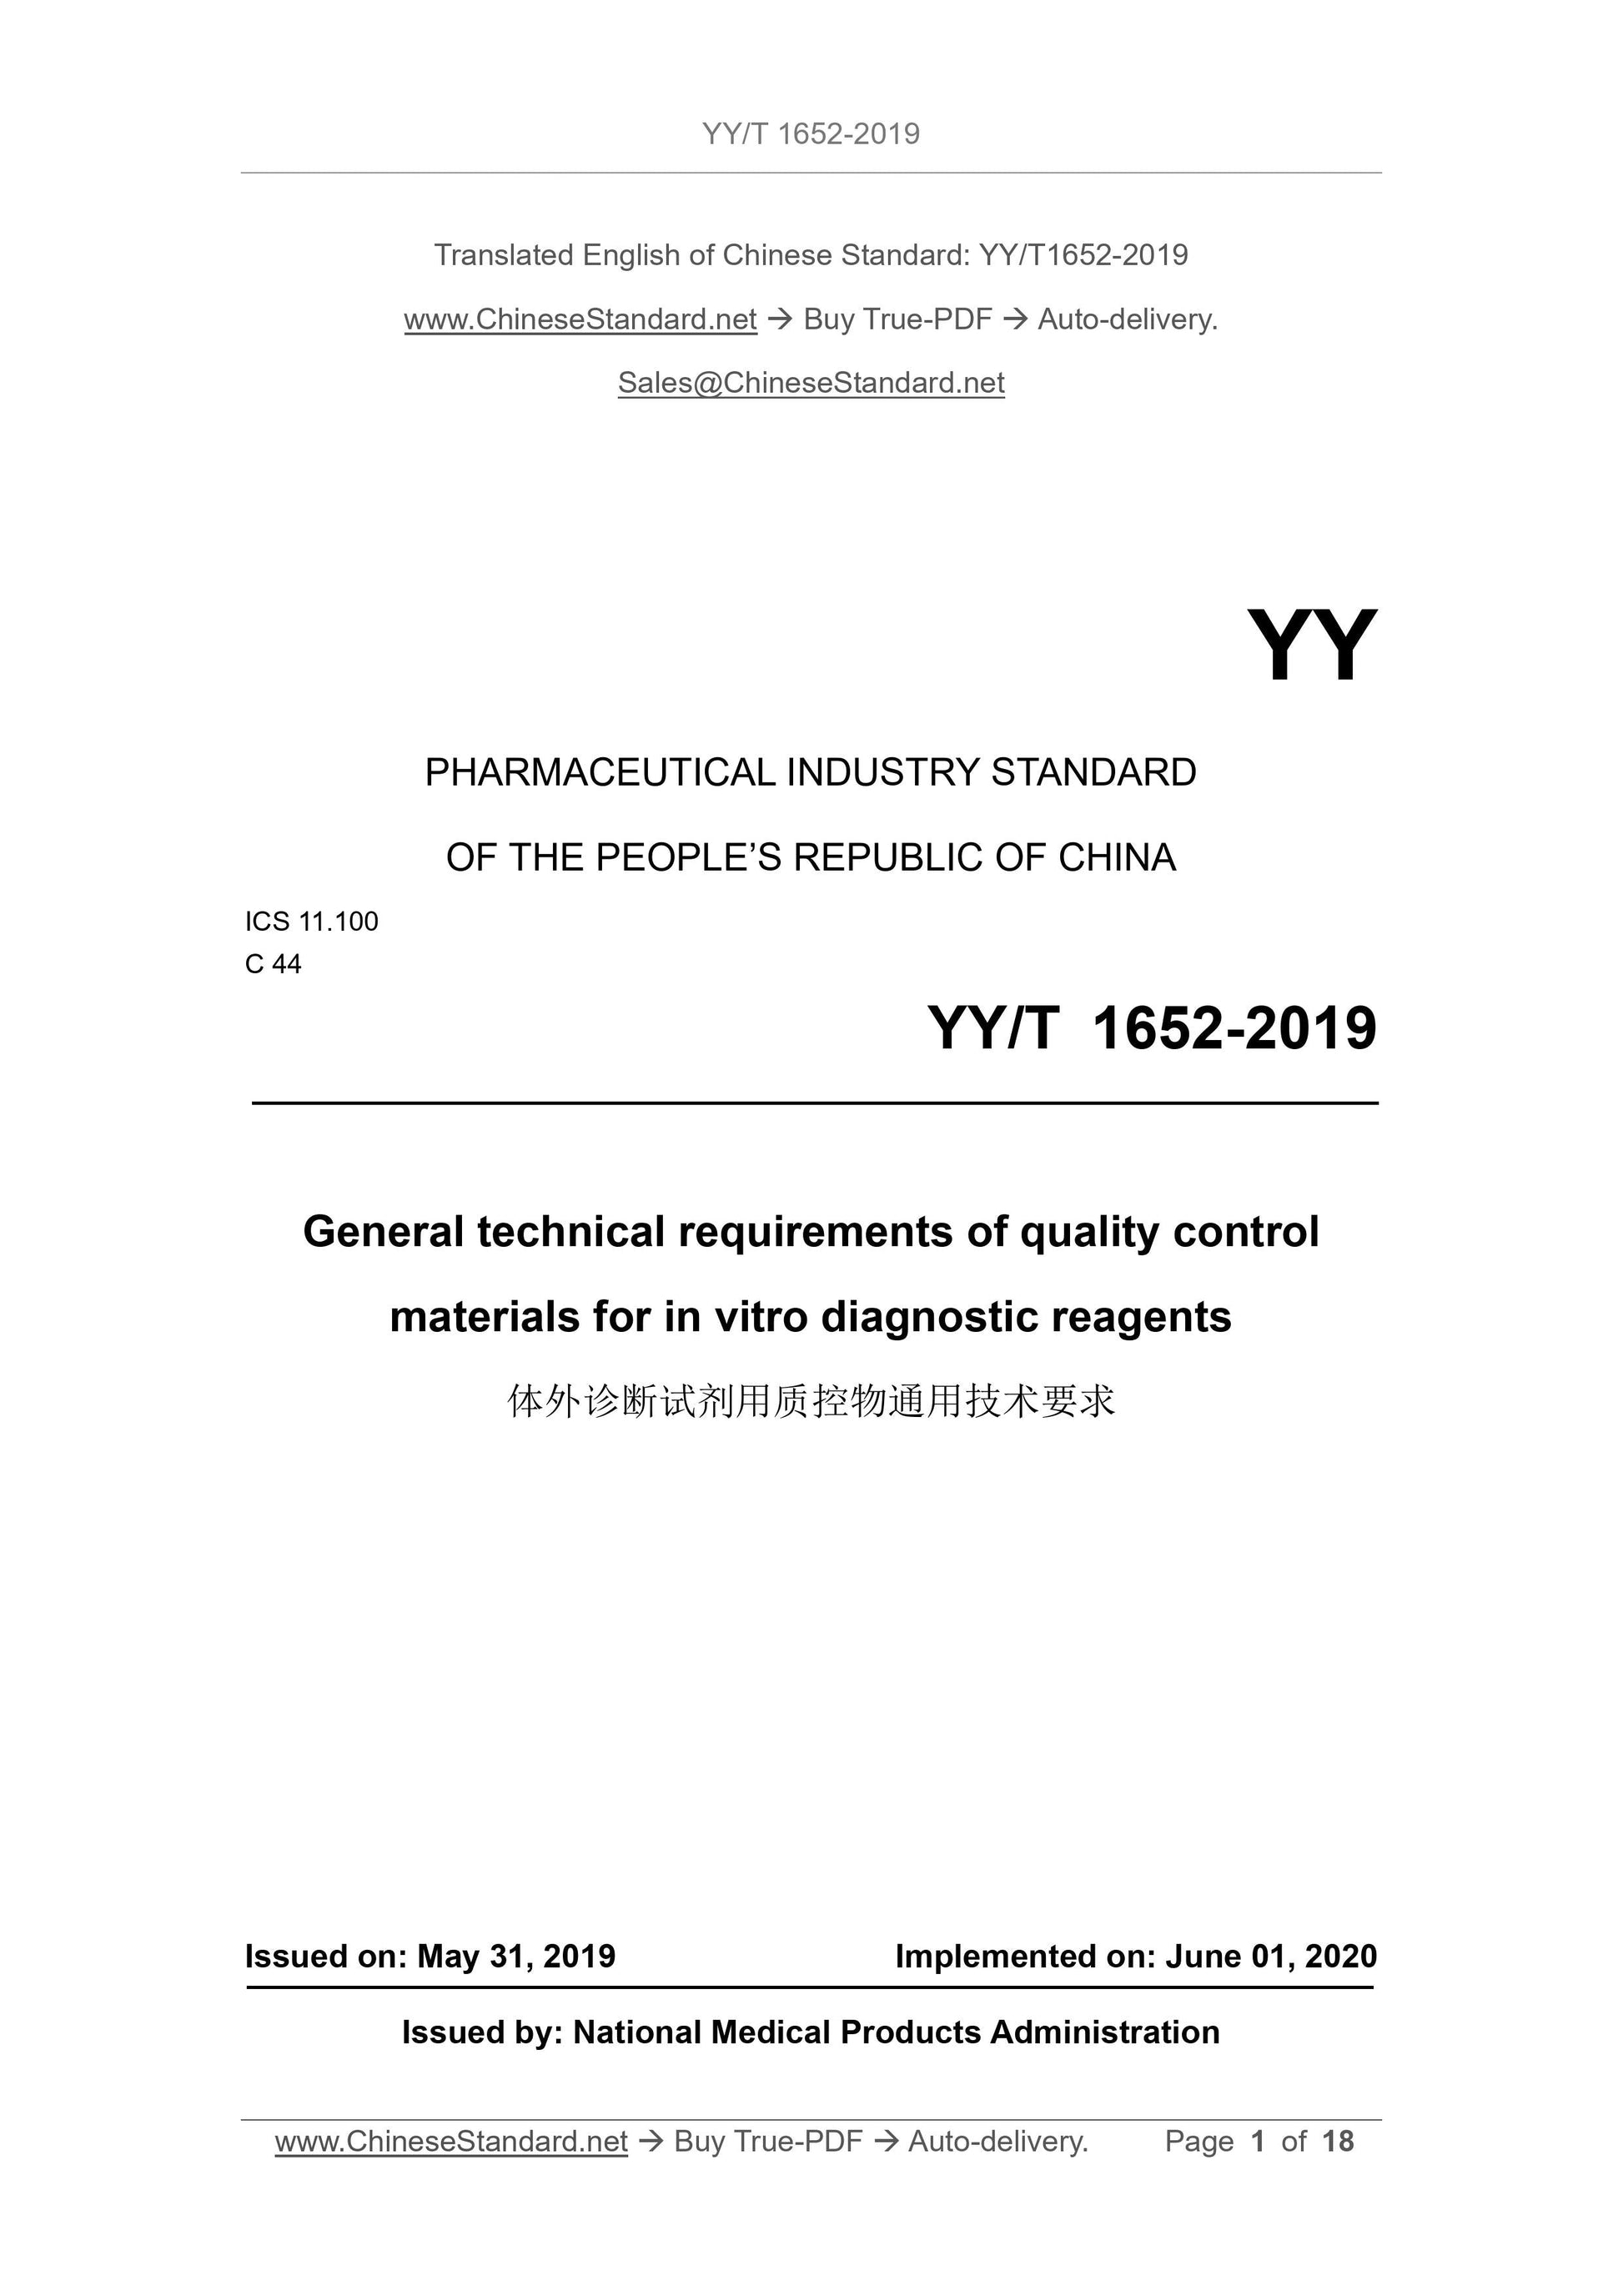 YY/T 1652-2019 Page 1